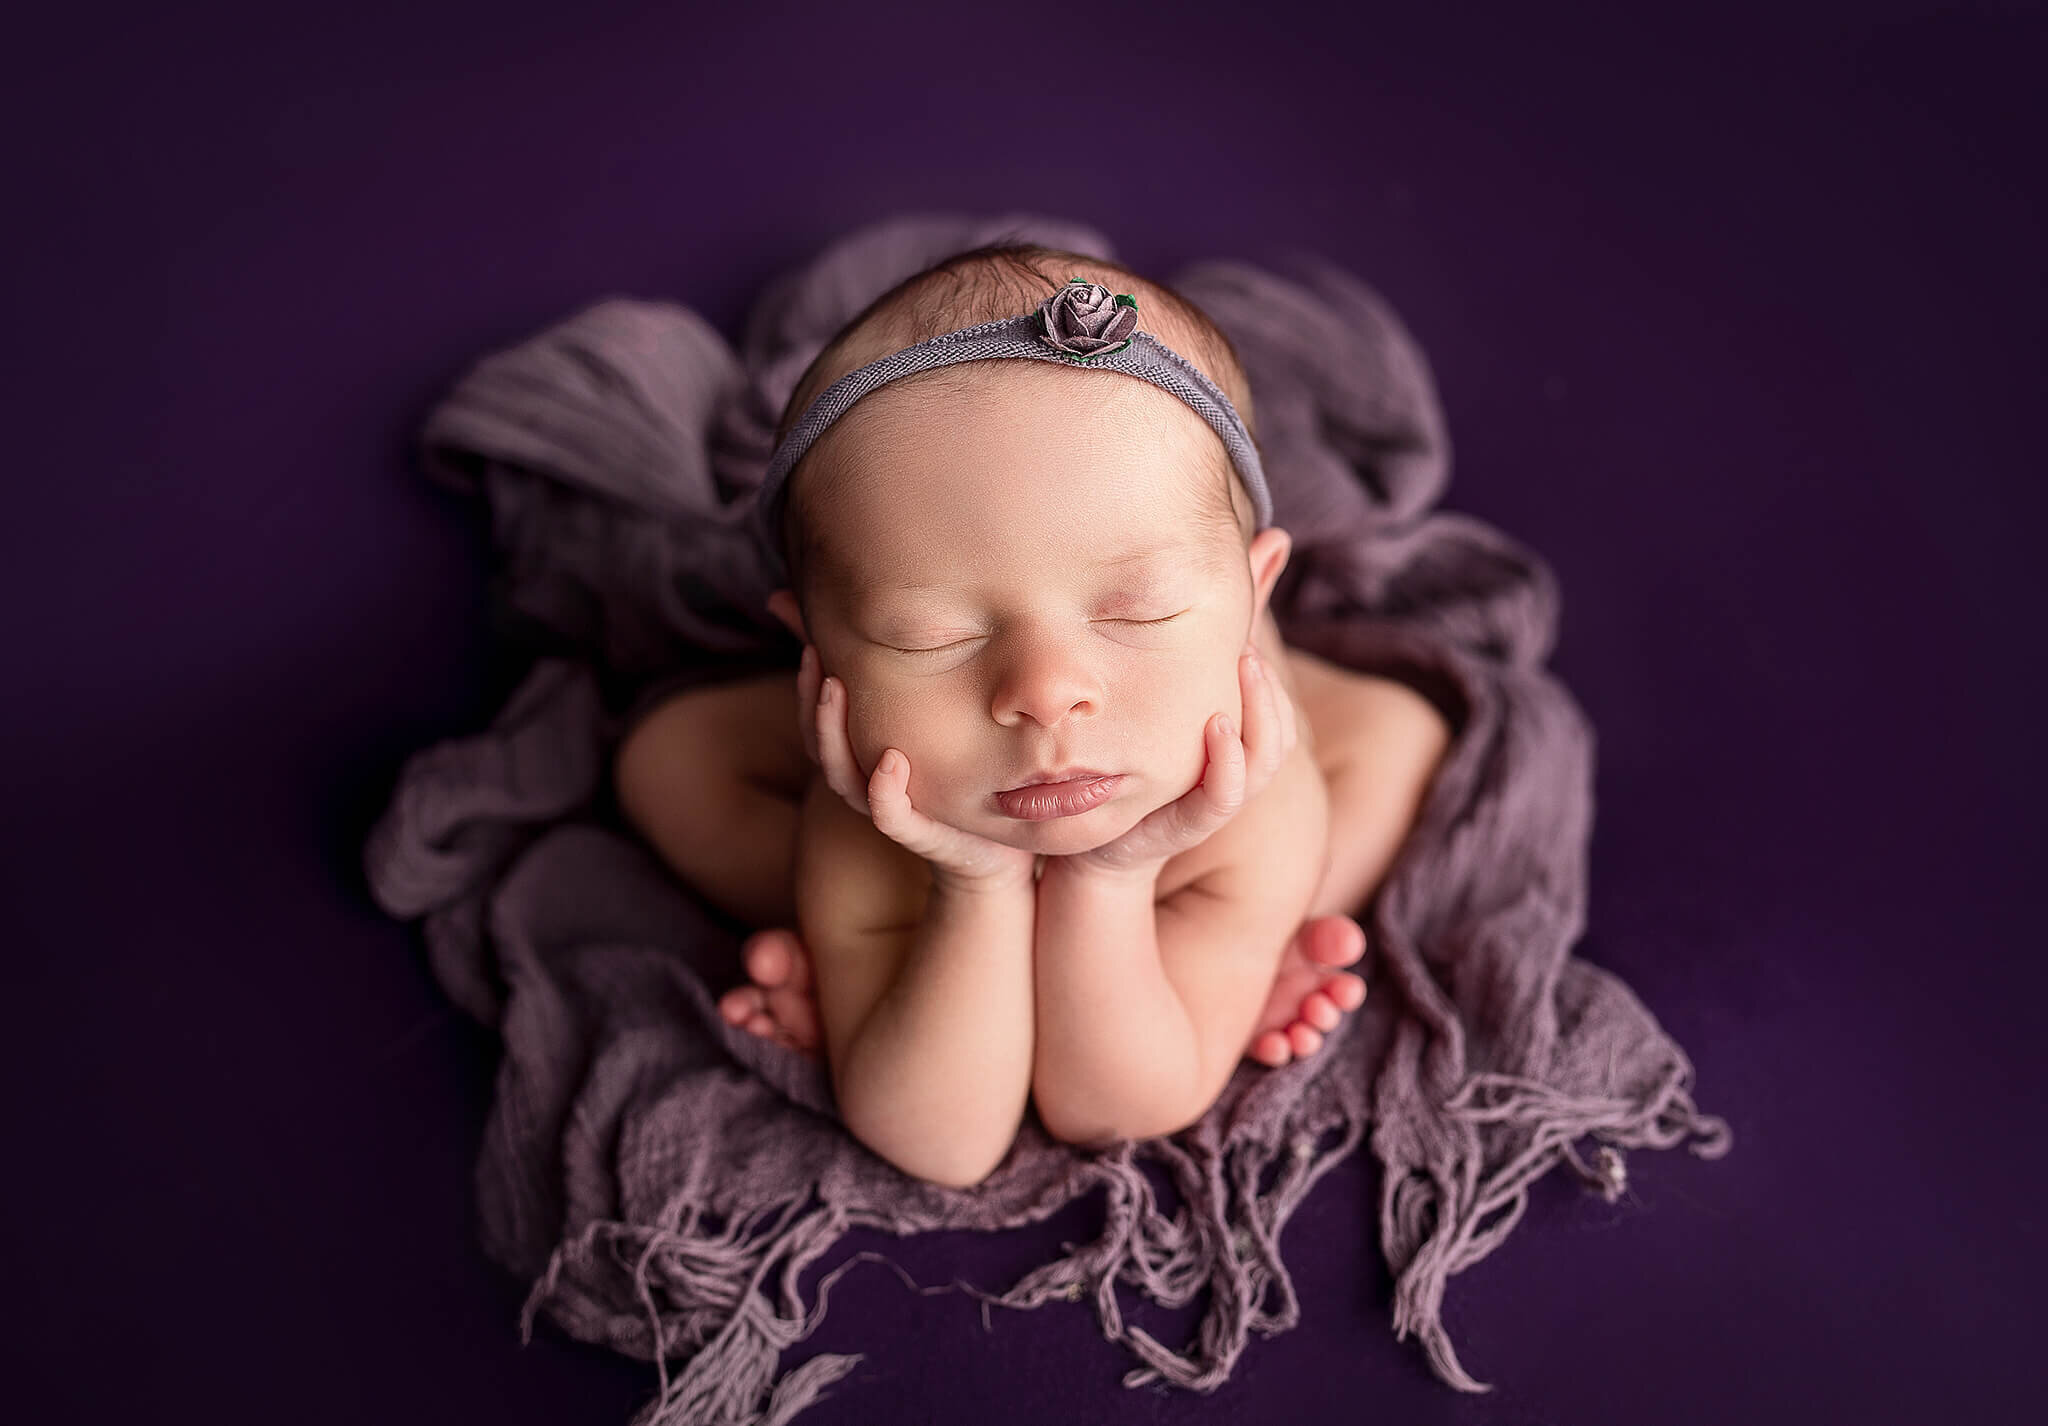 Newborn baby girl on purple blanket in froggy position